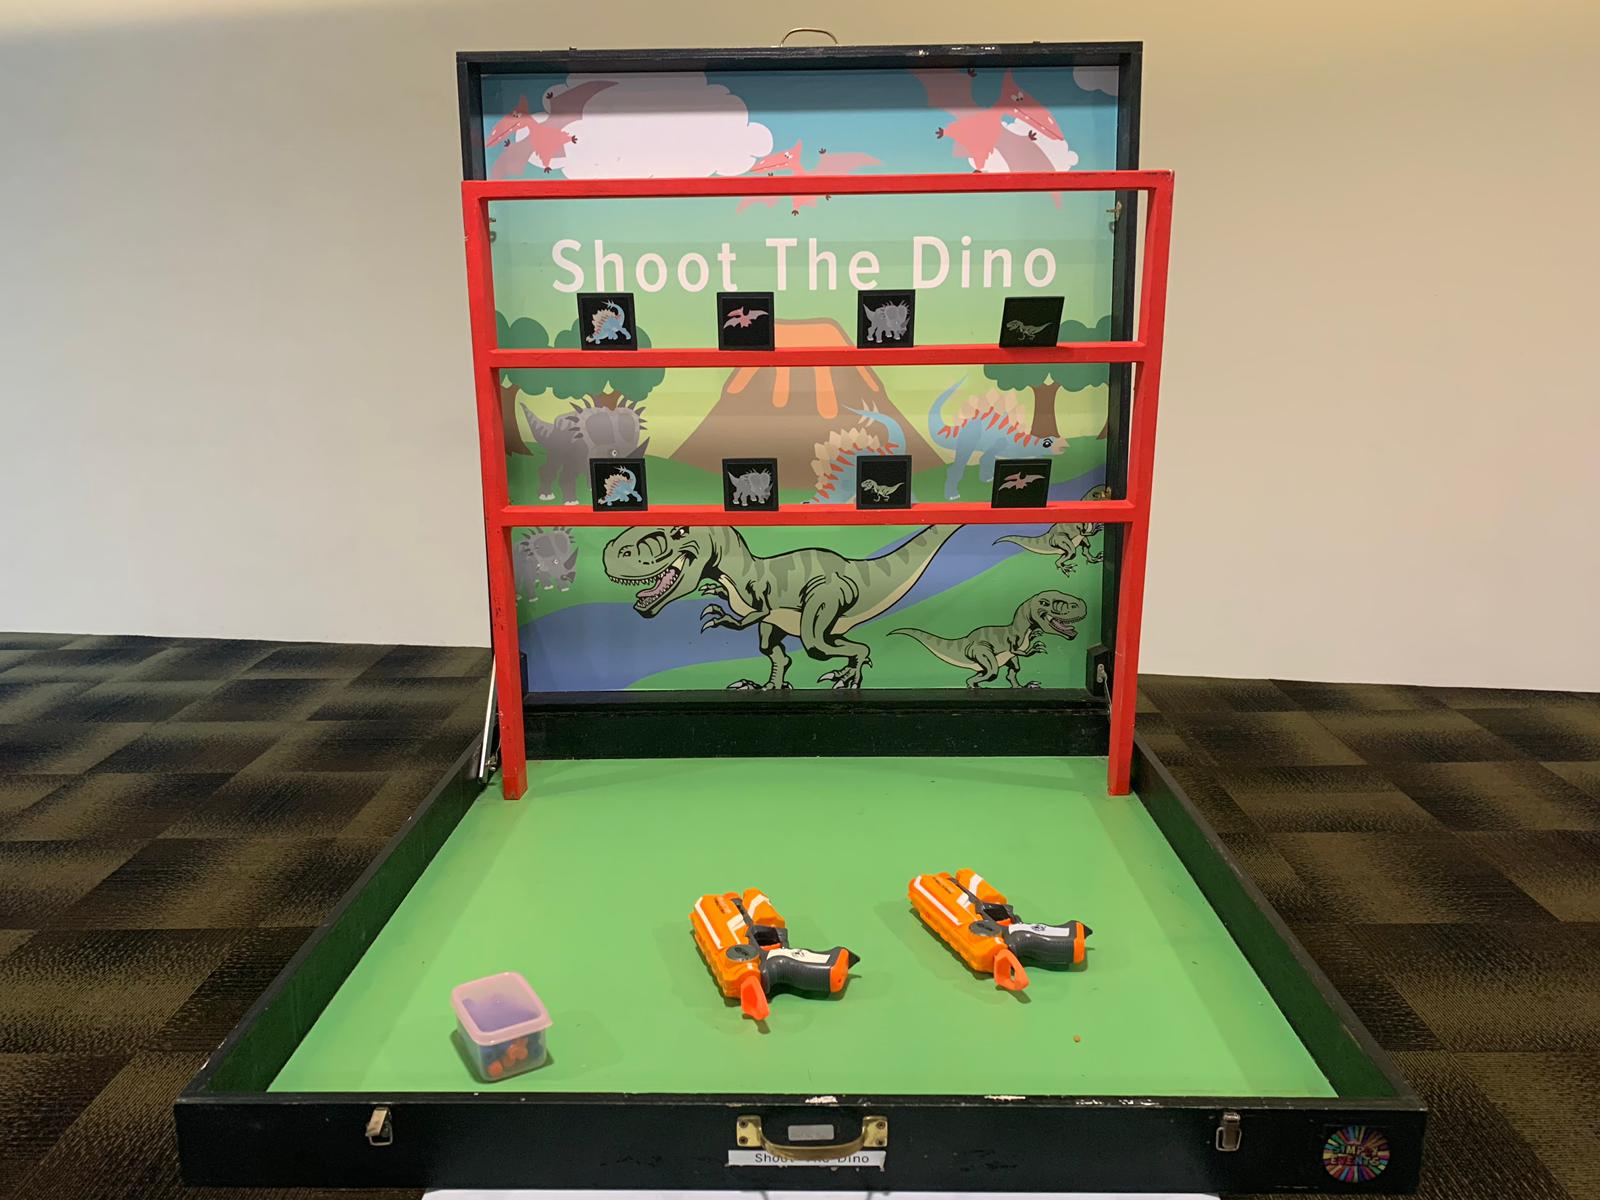 Shoot The Dino